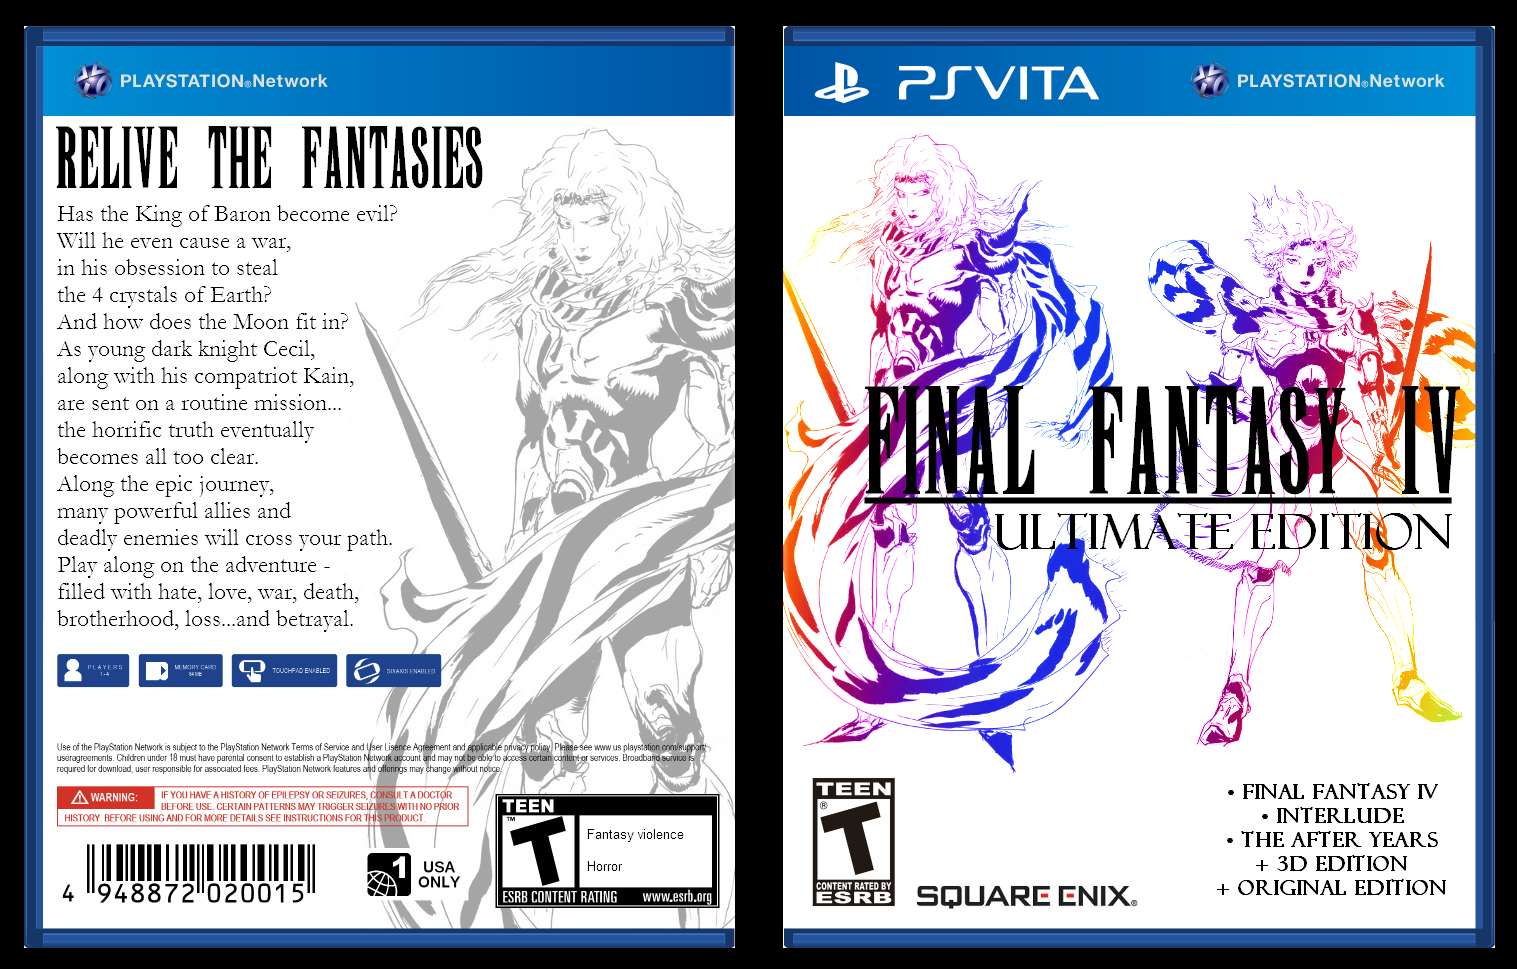 Final Fantasy IV Ultimate Edition box cover